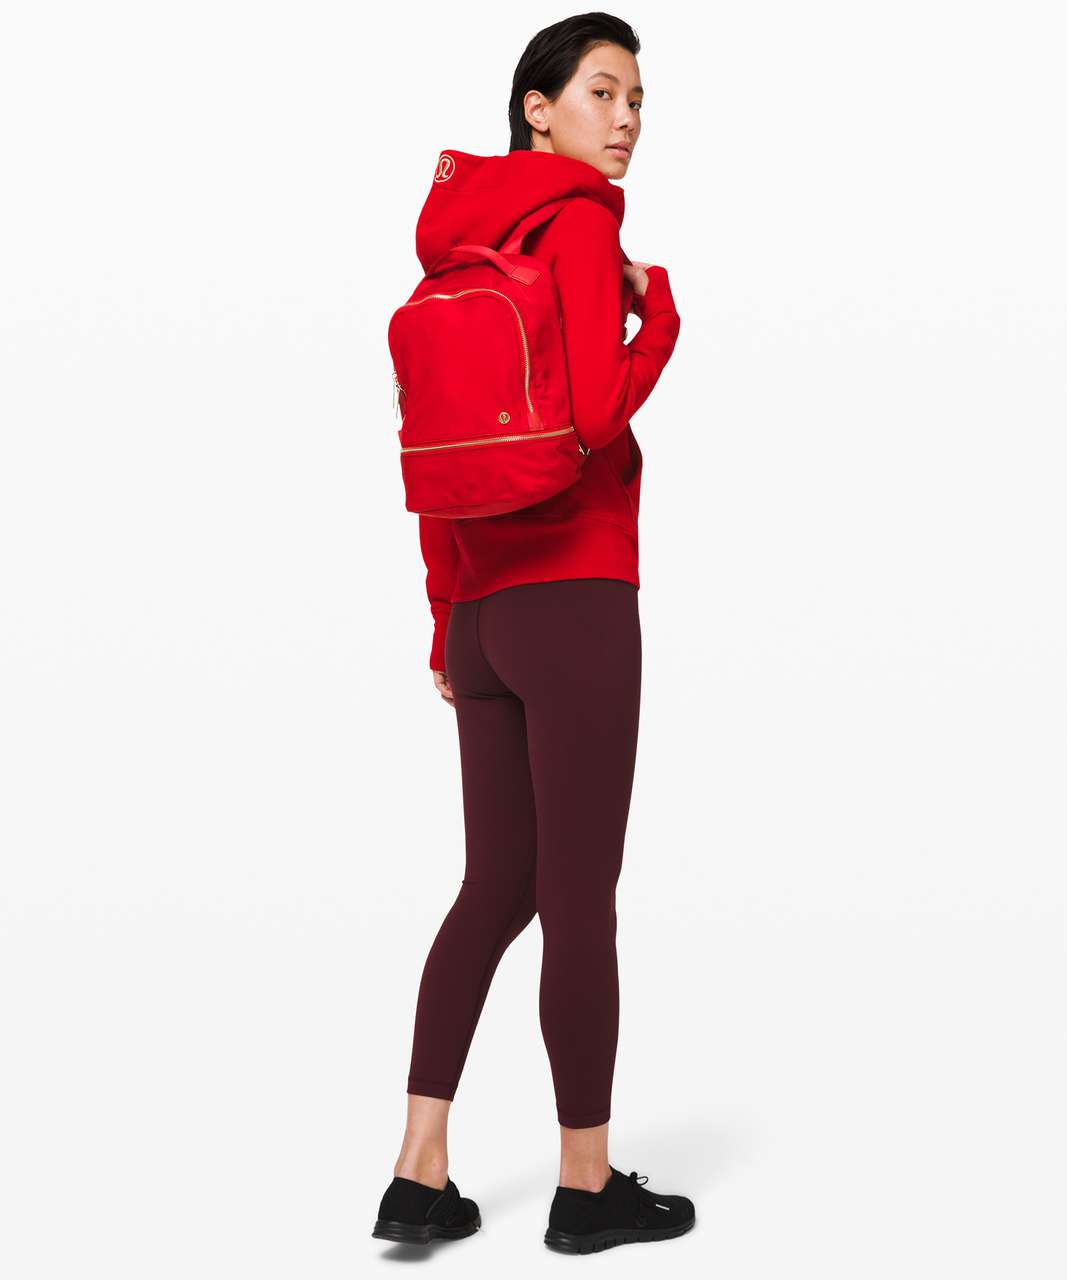 Lululemon City Adventurer Backpack Mini 10L *Lunar New Year - Dark Red